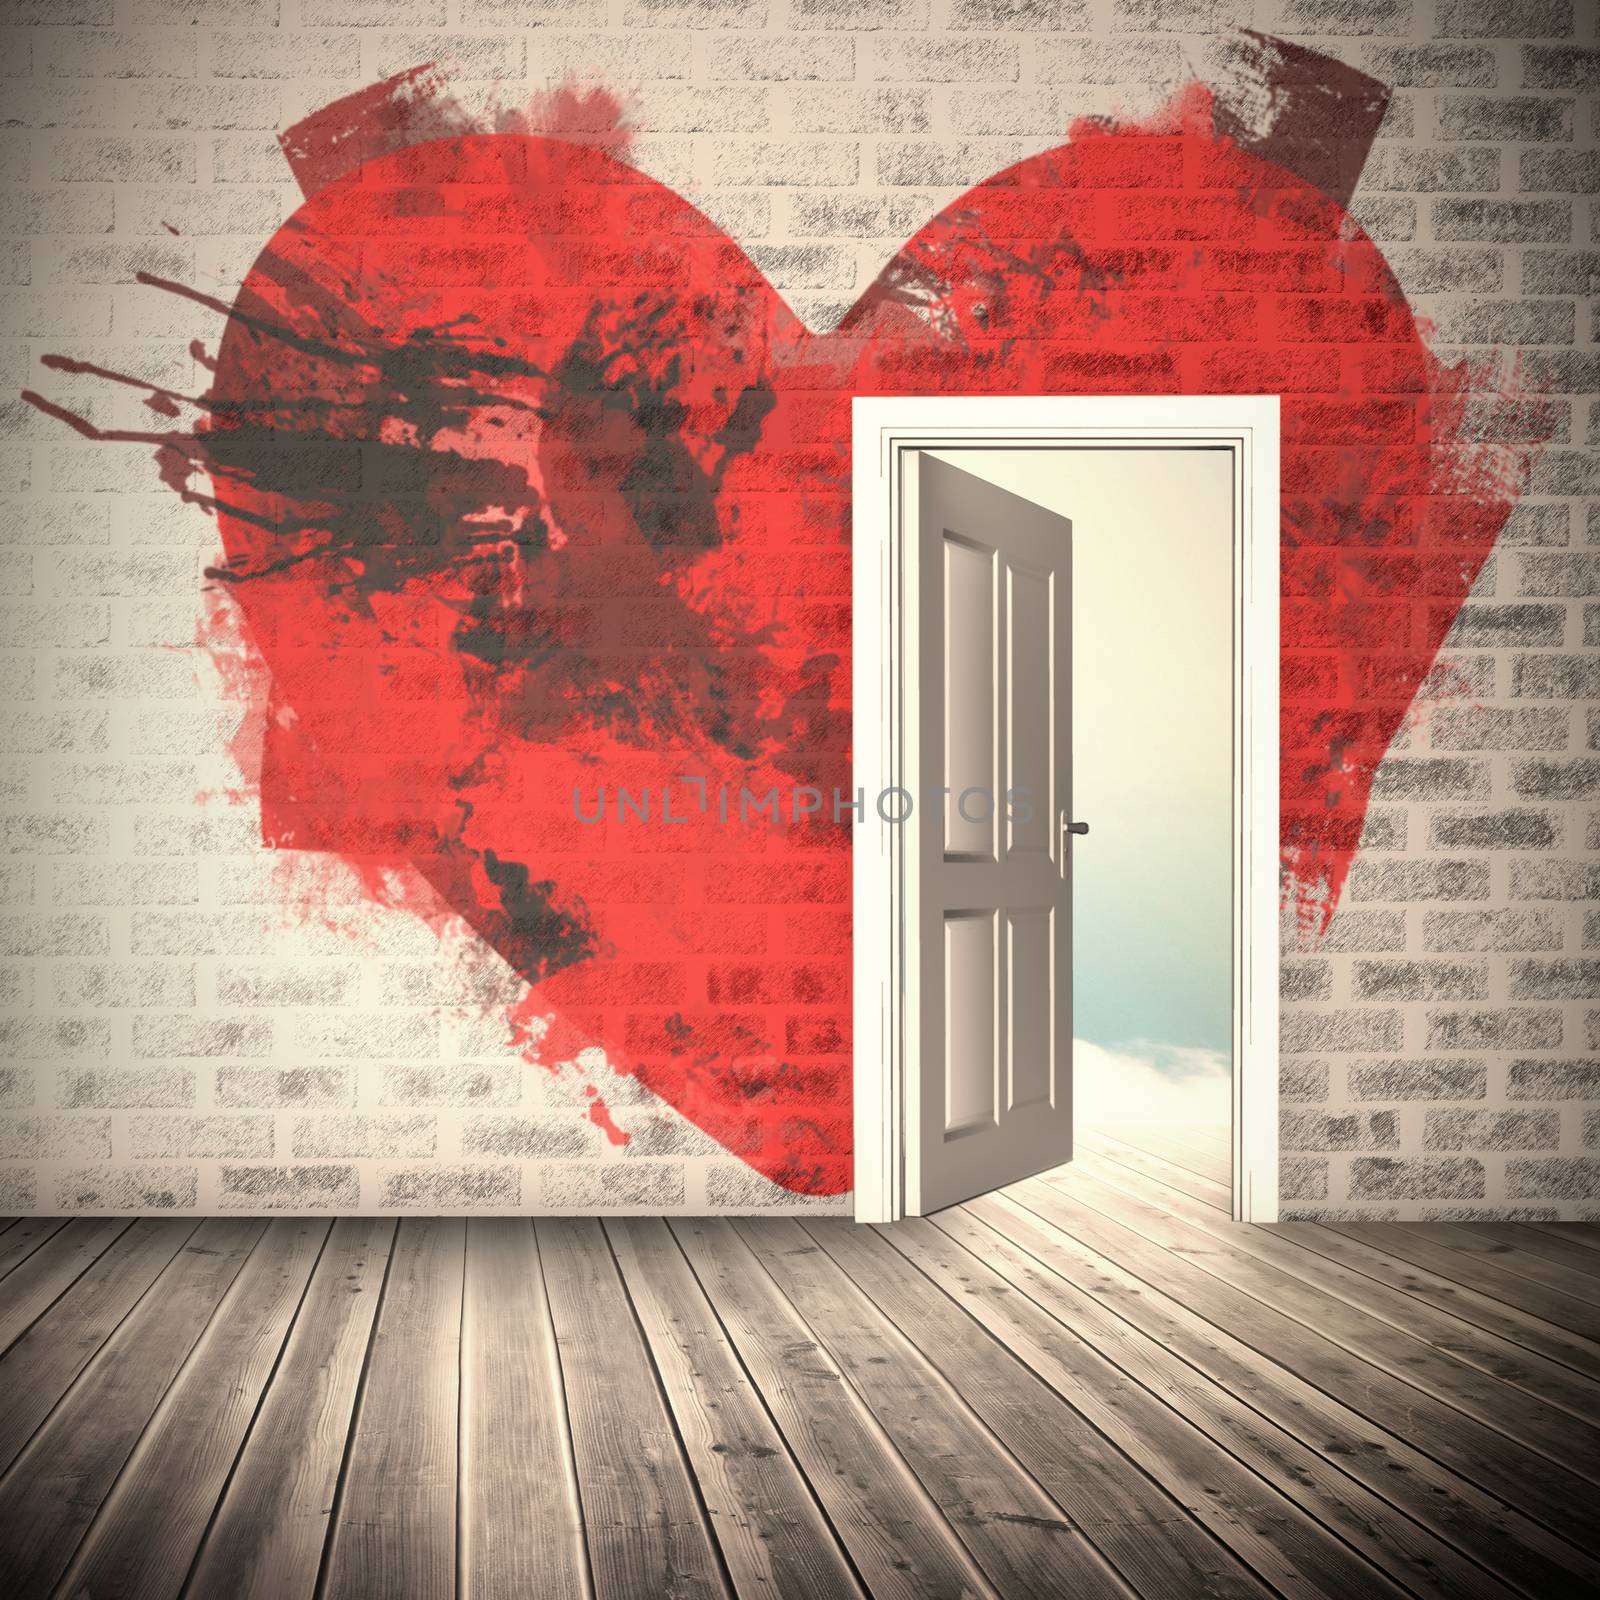 Heart against open door on brick lined wall